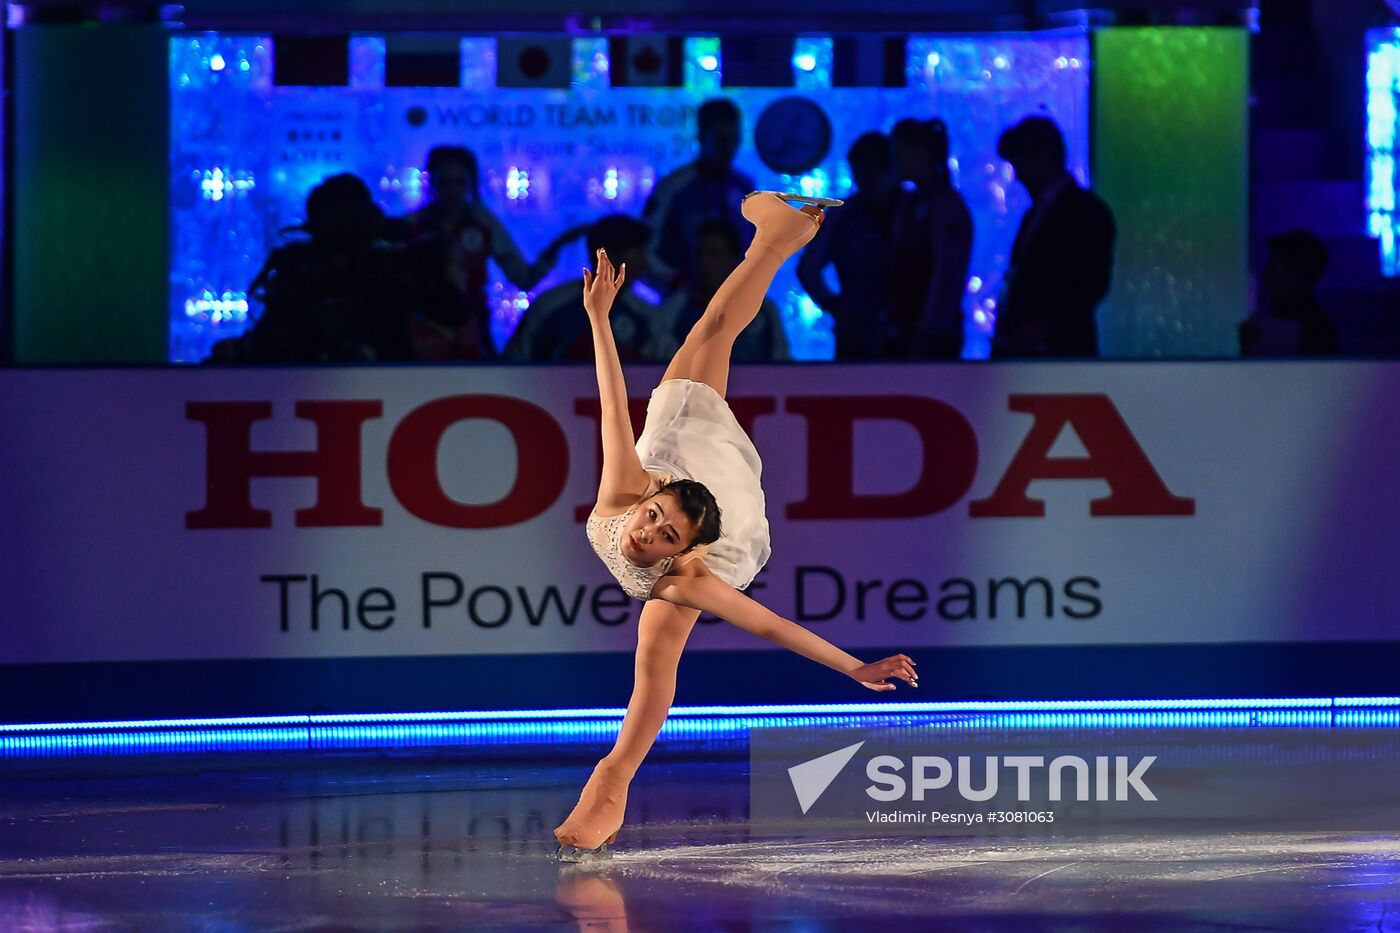 2017 ISU World Team Trophy in Figure Skating. Exhibition gala